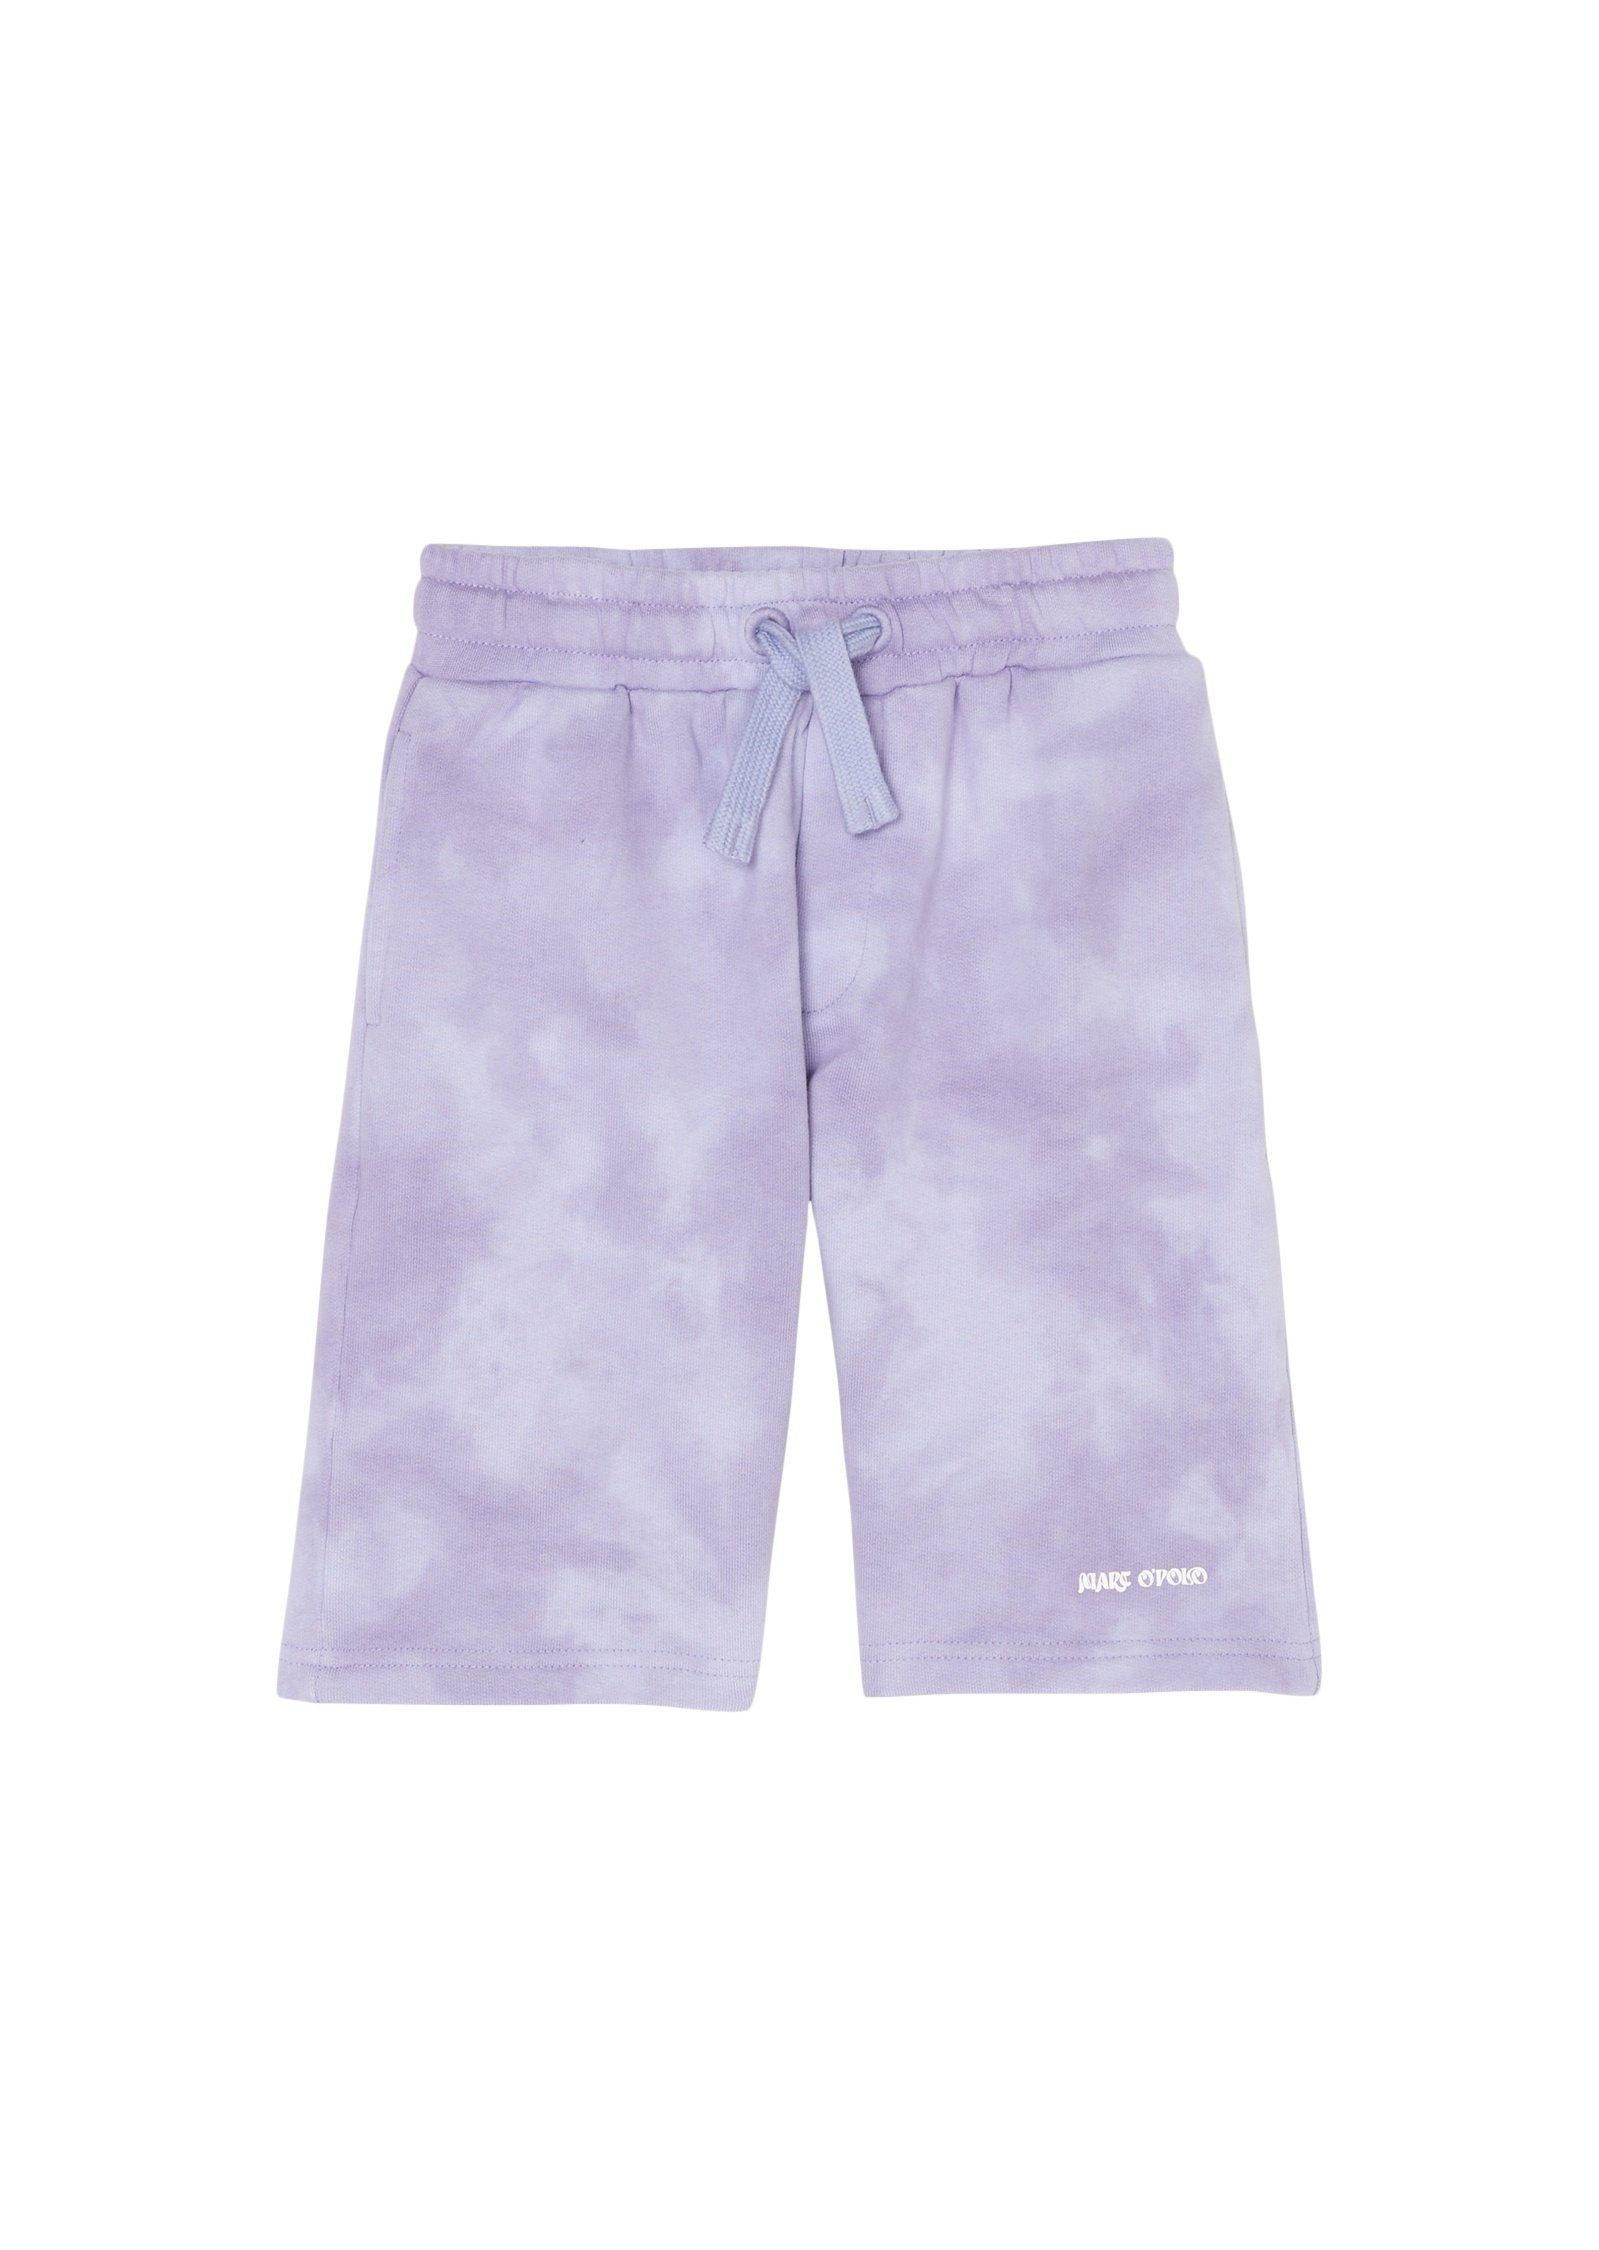 Batik-Dessin O'Polo Shorts lila im Marc